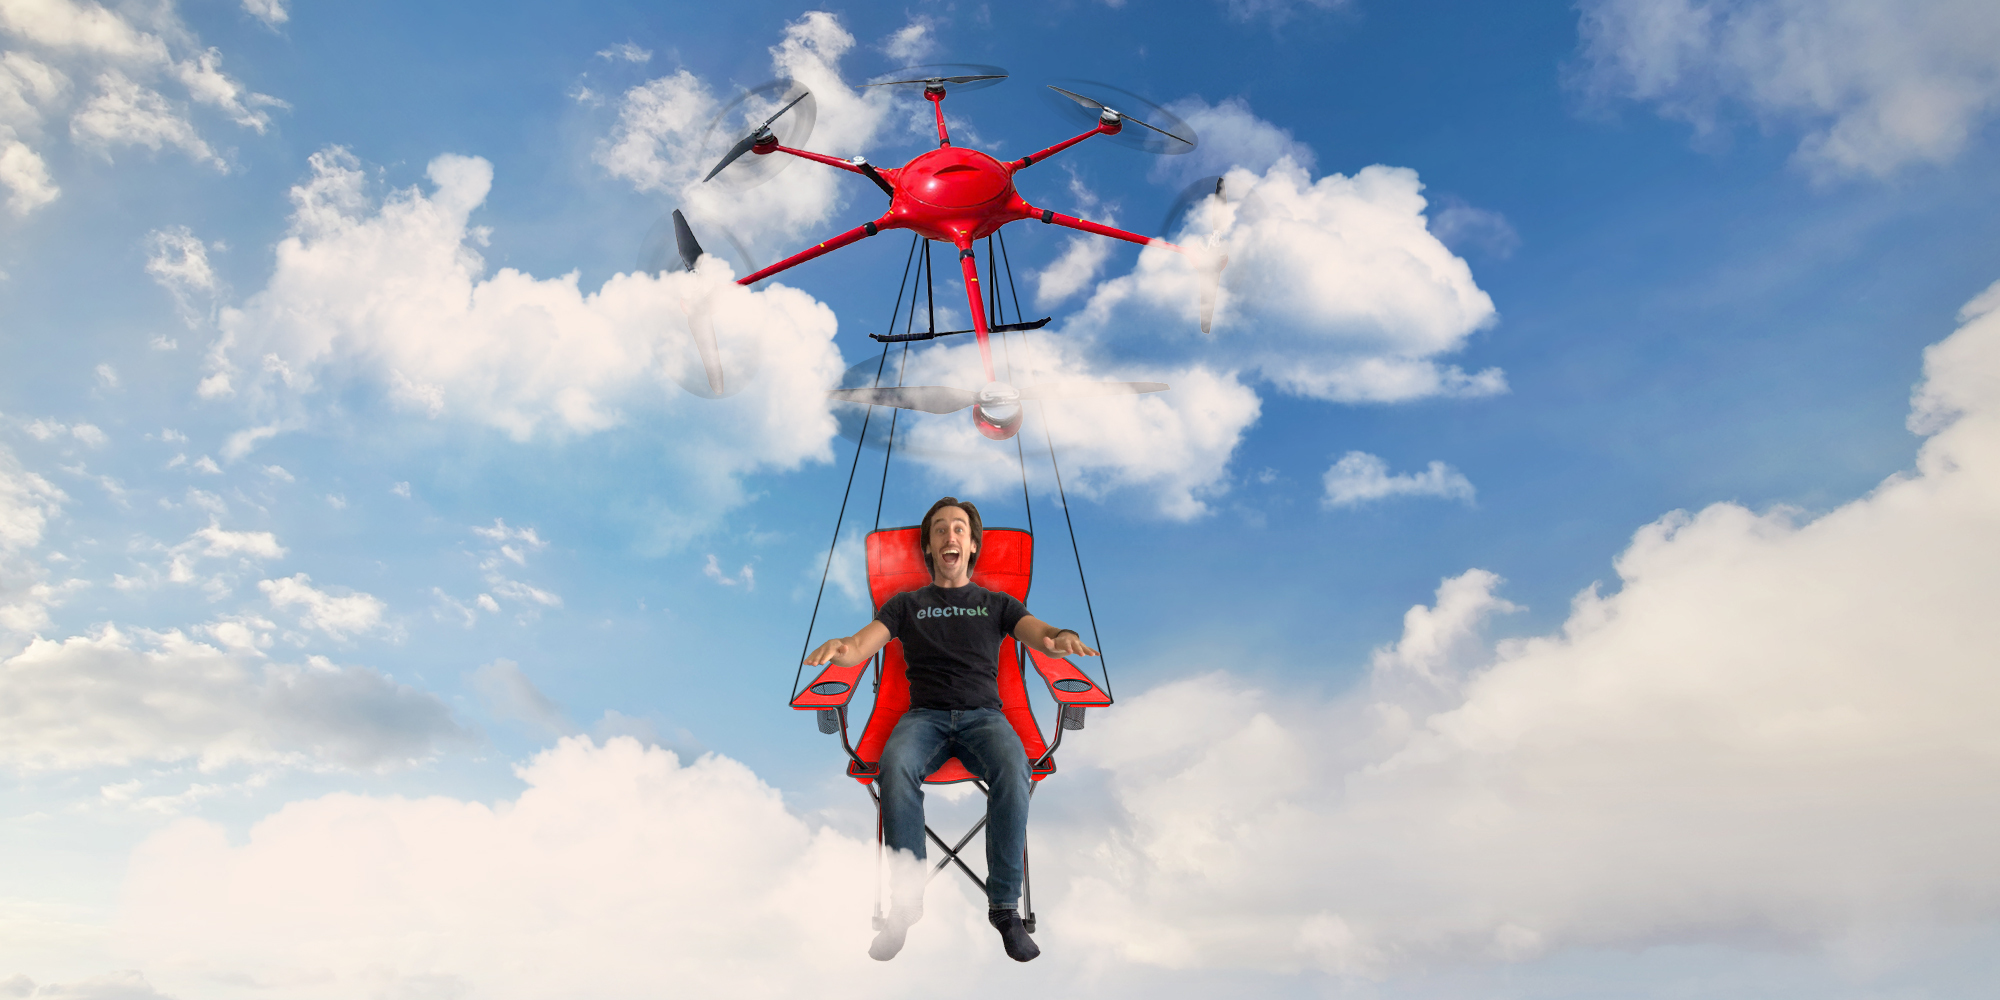 uddanne Diskriminere Virkelig Awesomely Weird Alibaba EV of the Week: Passenger-carrying drone